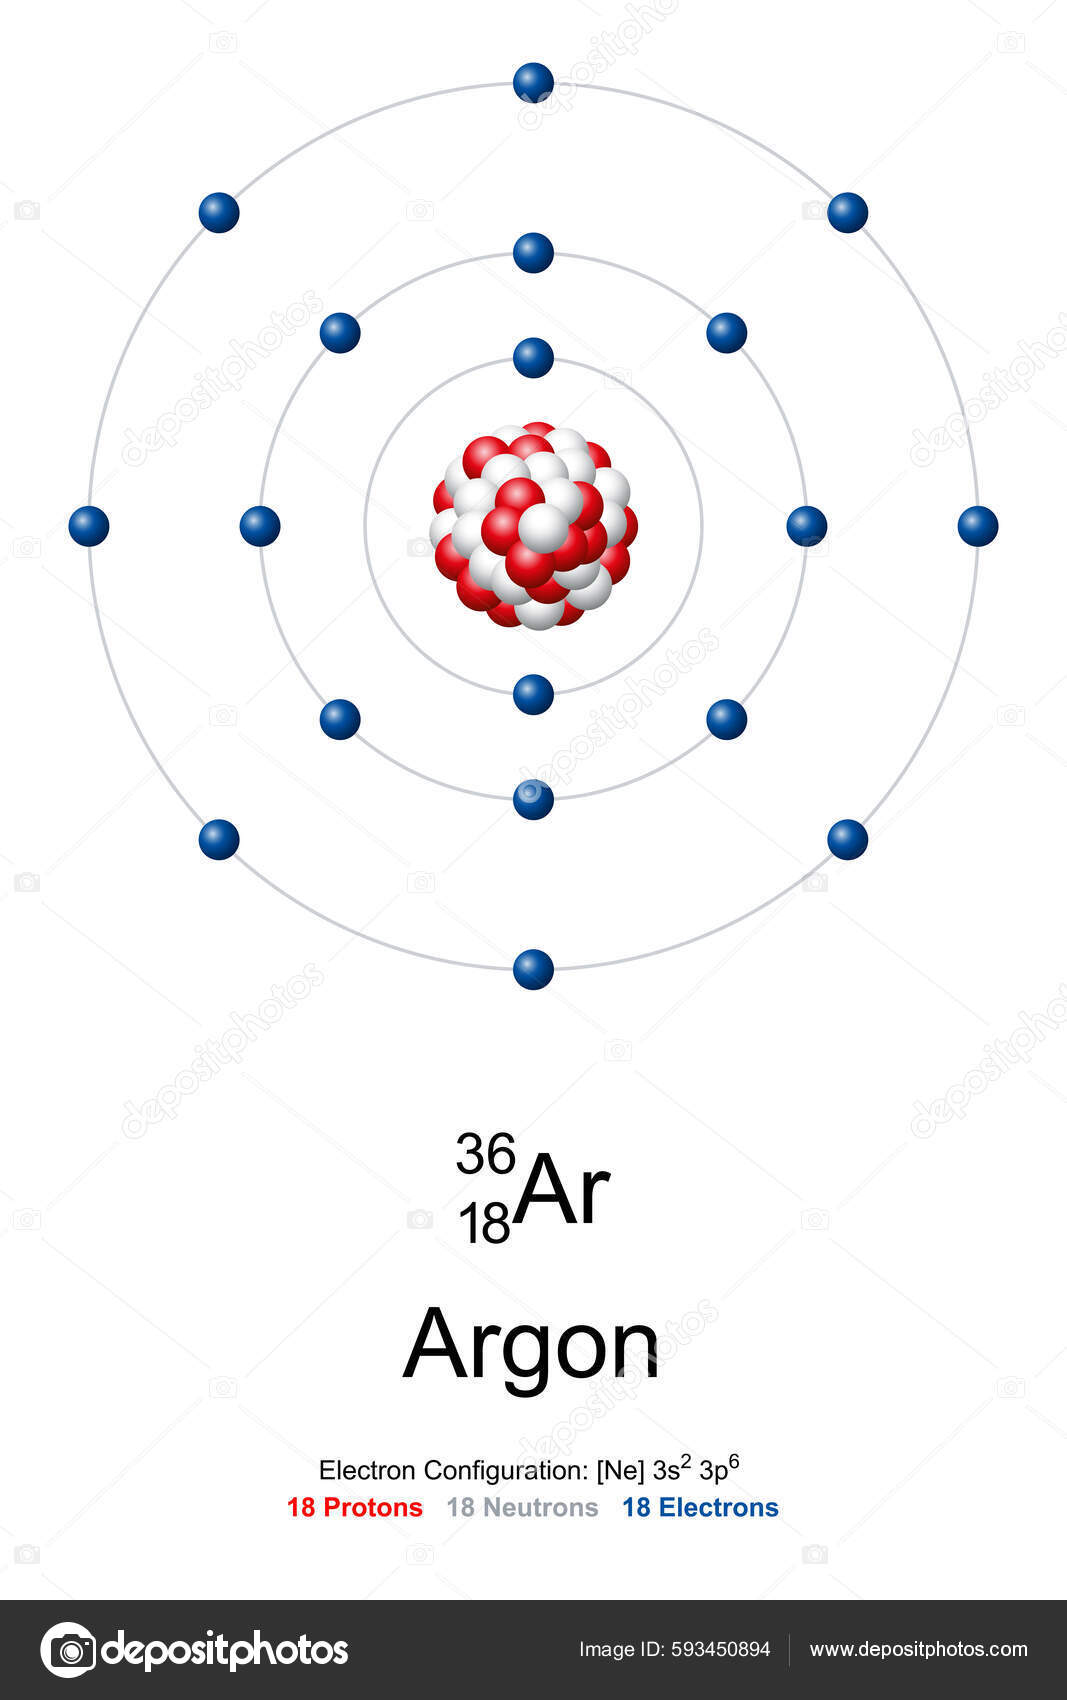 Chemical Elements.com - Argon (Ar)